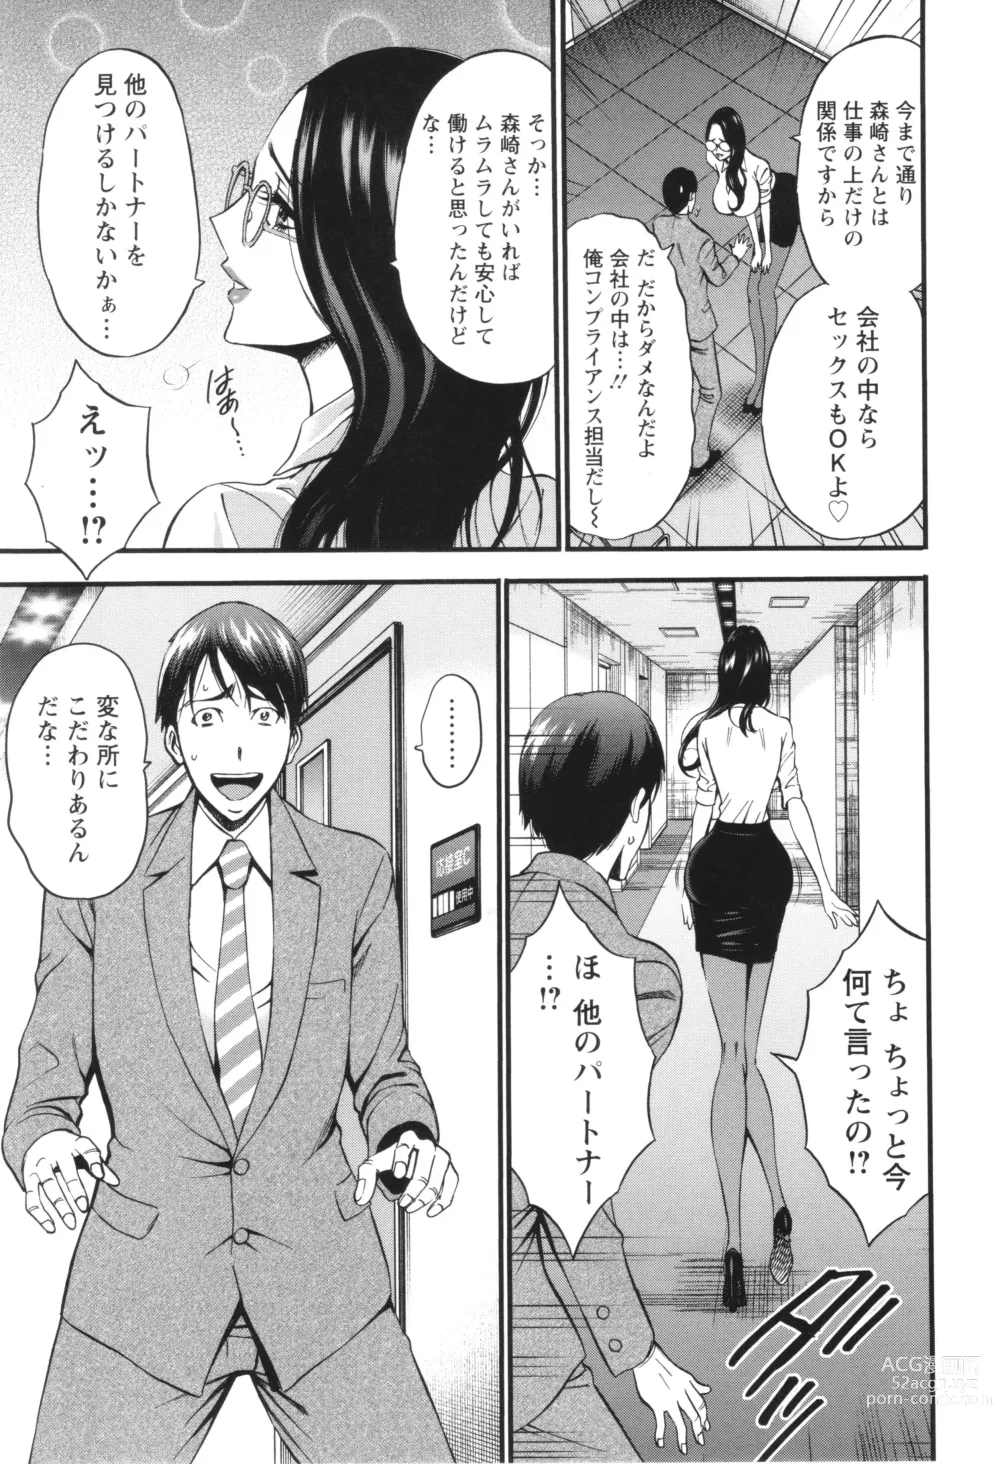 Page 33 of manga Compla Yuruyuru Chimari-san  - Chimaris compliance awareness is very lax.